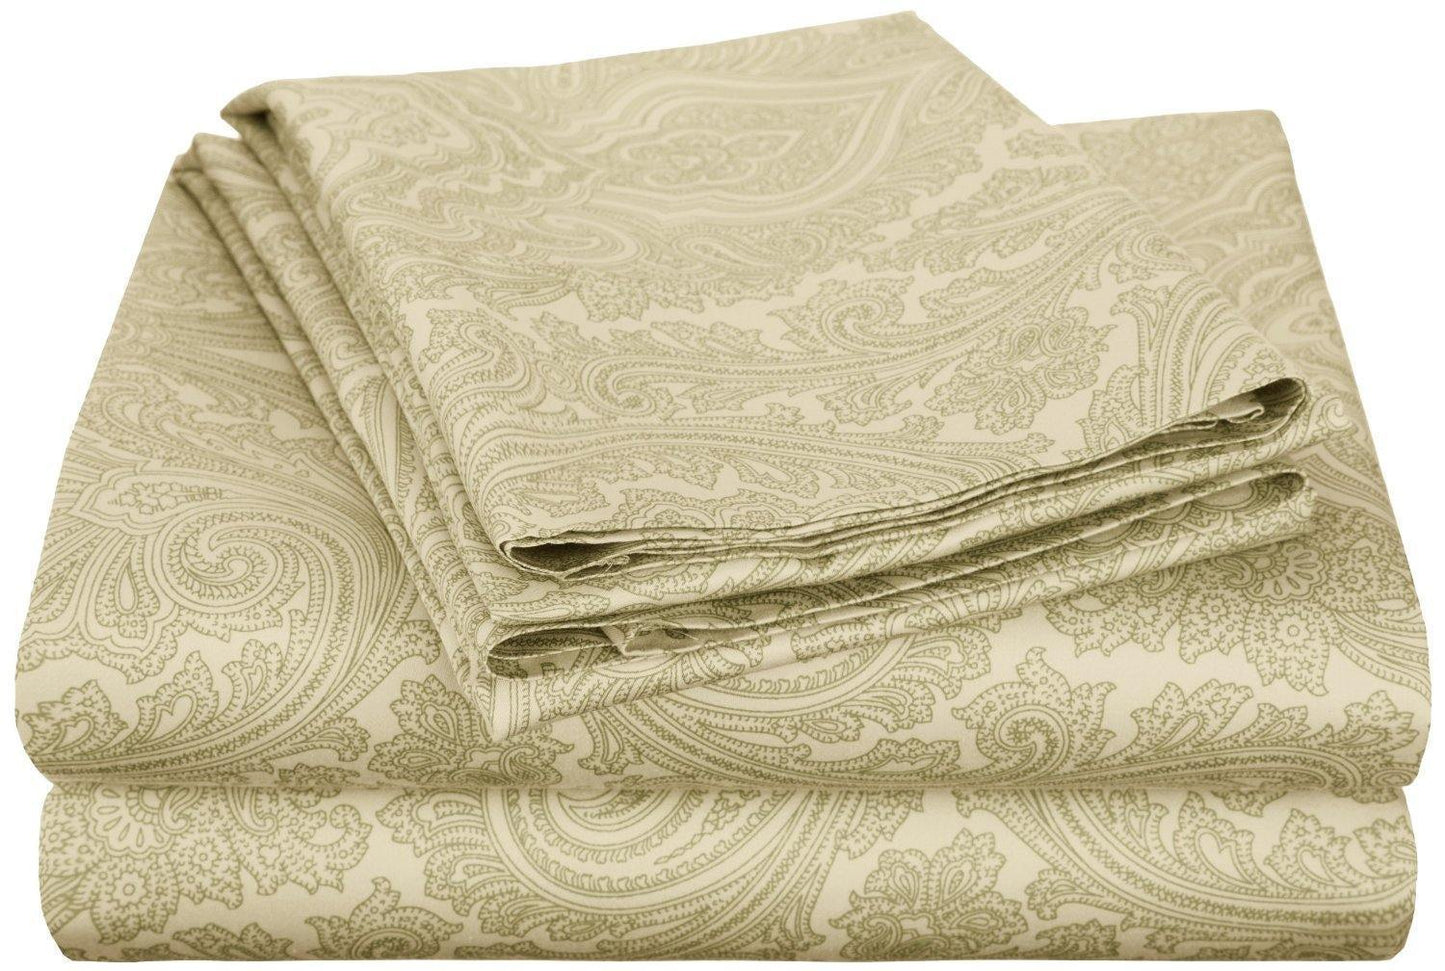 Decorative Italian Paisley Cotton-Rich Sheet Set FredCo